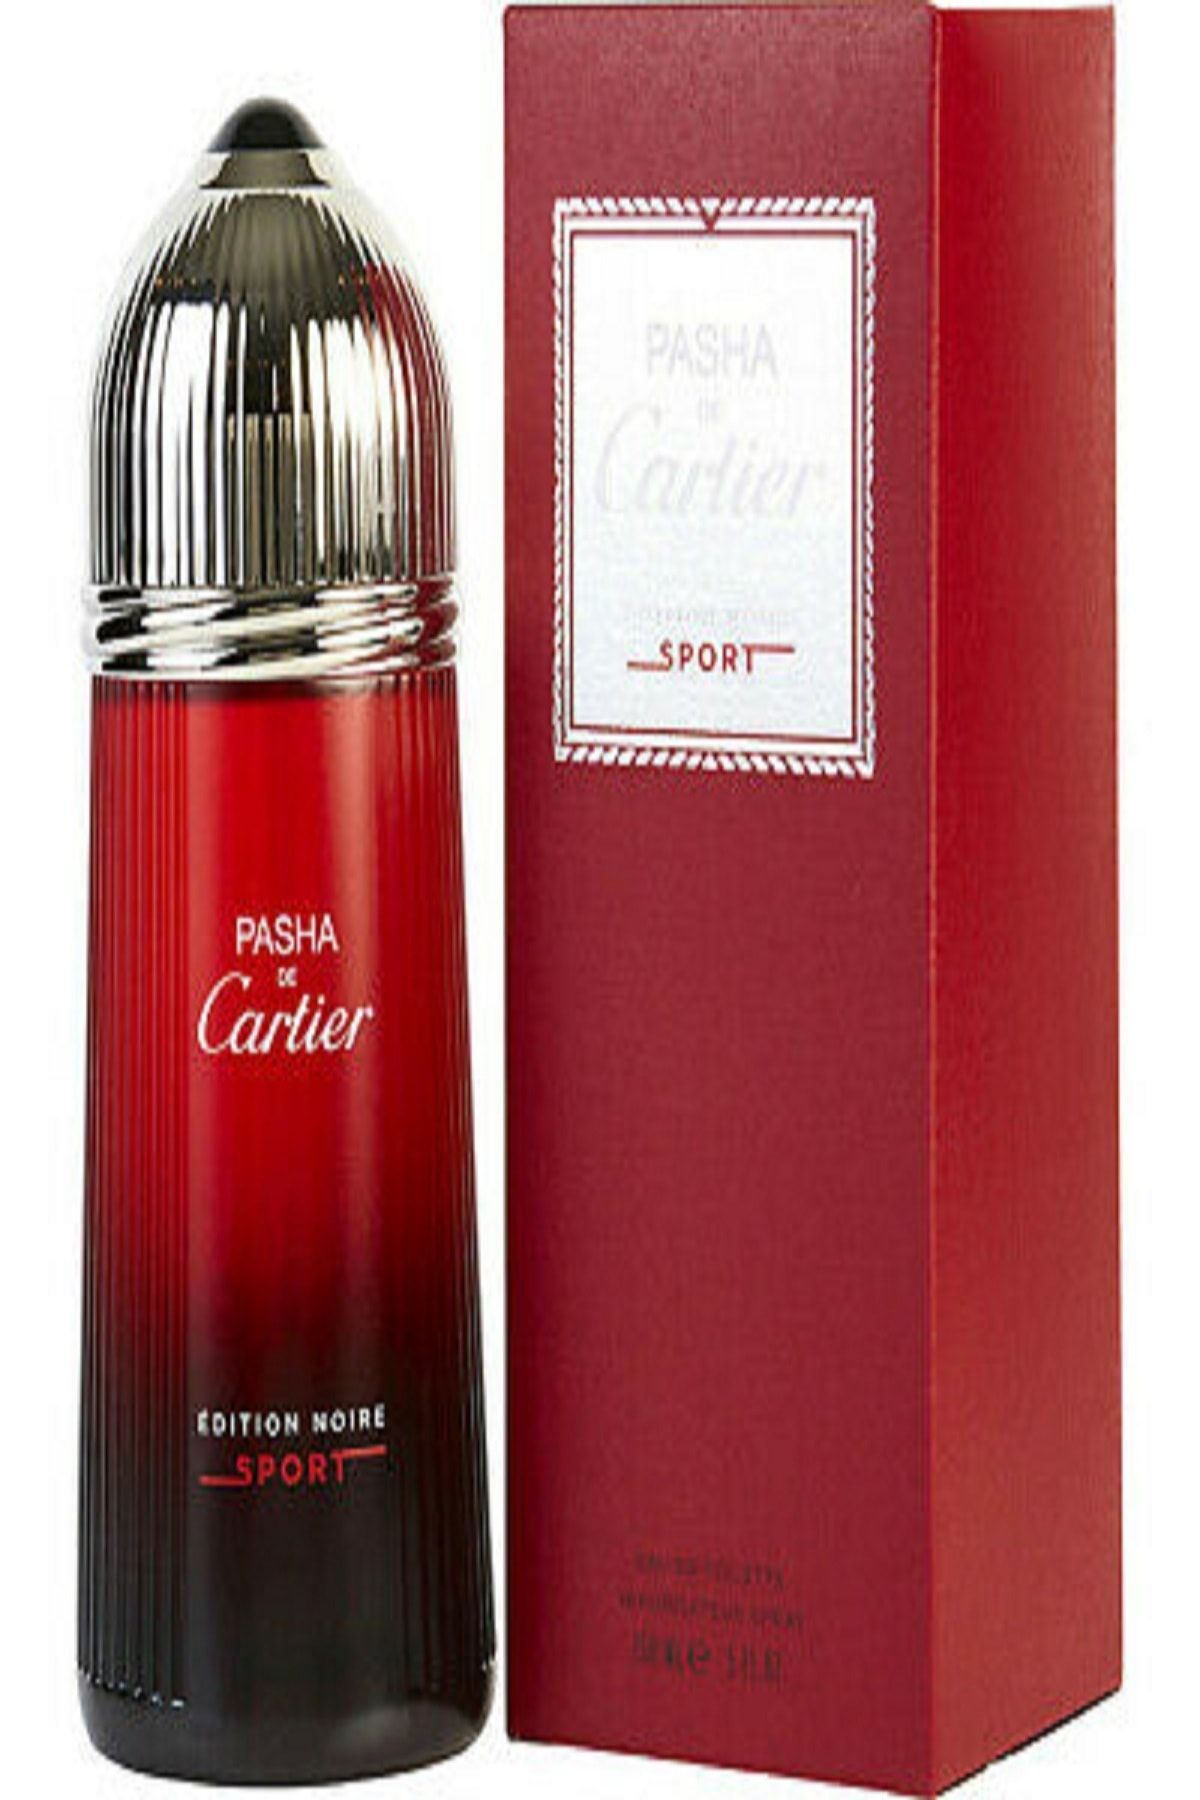 Cartier Pasha Edition Noire Sport 150ml Erkek Parfüm